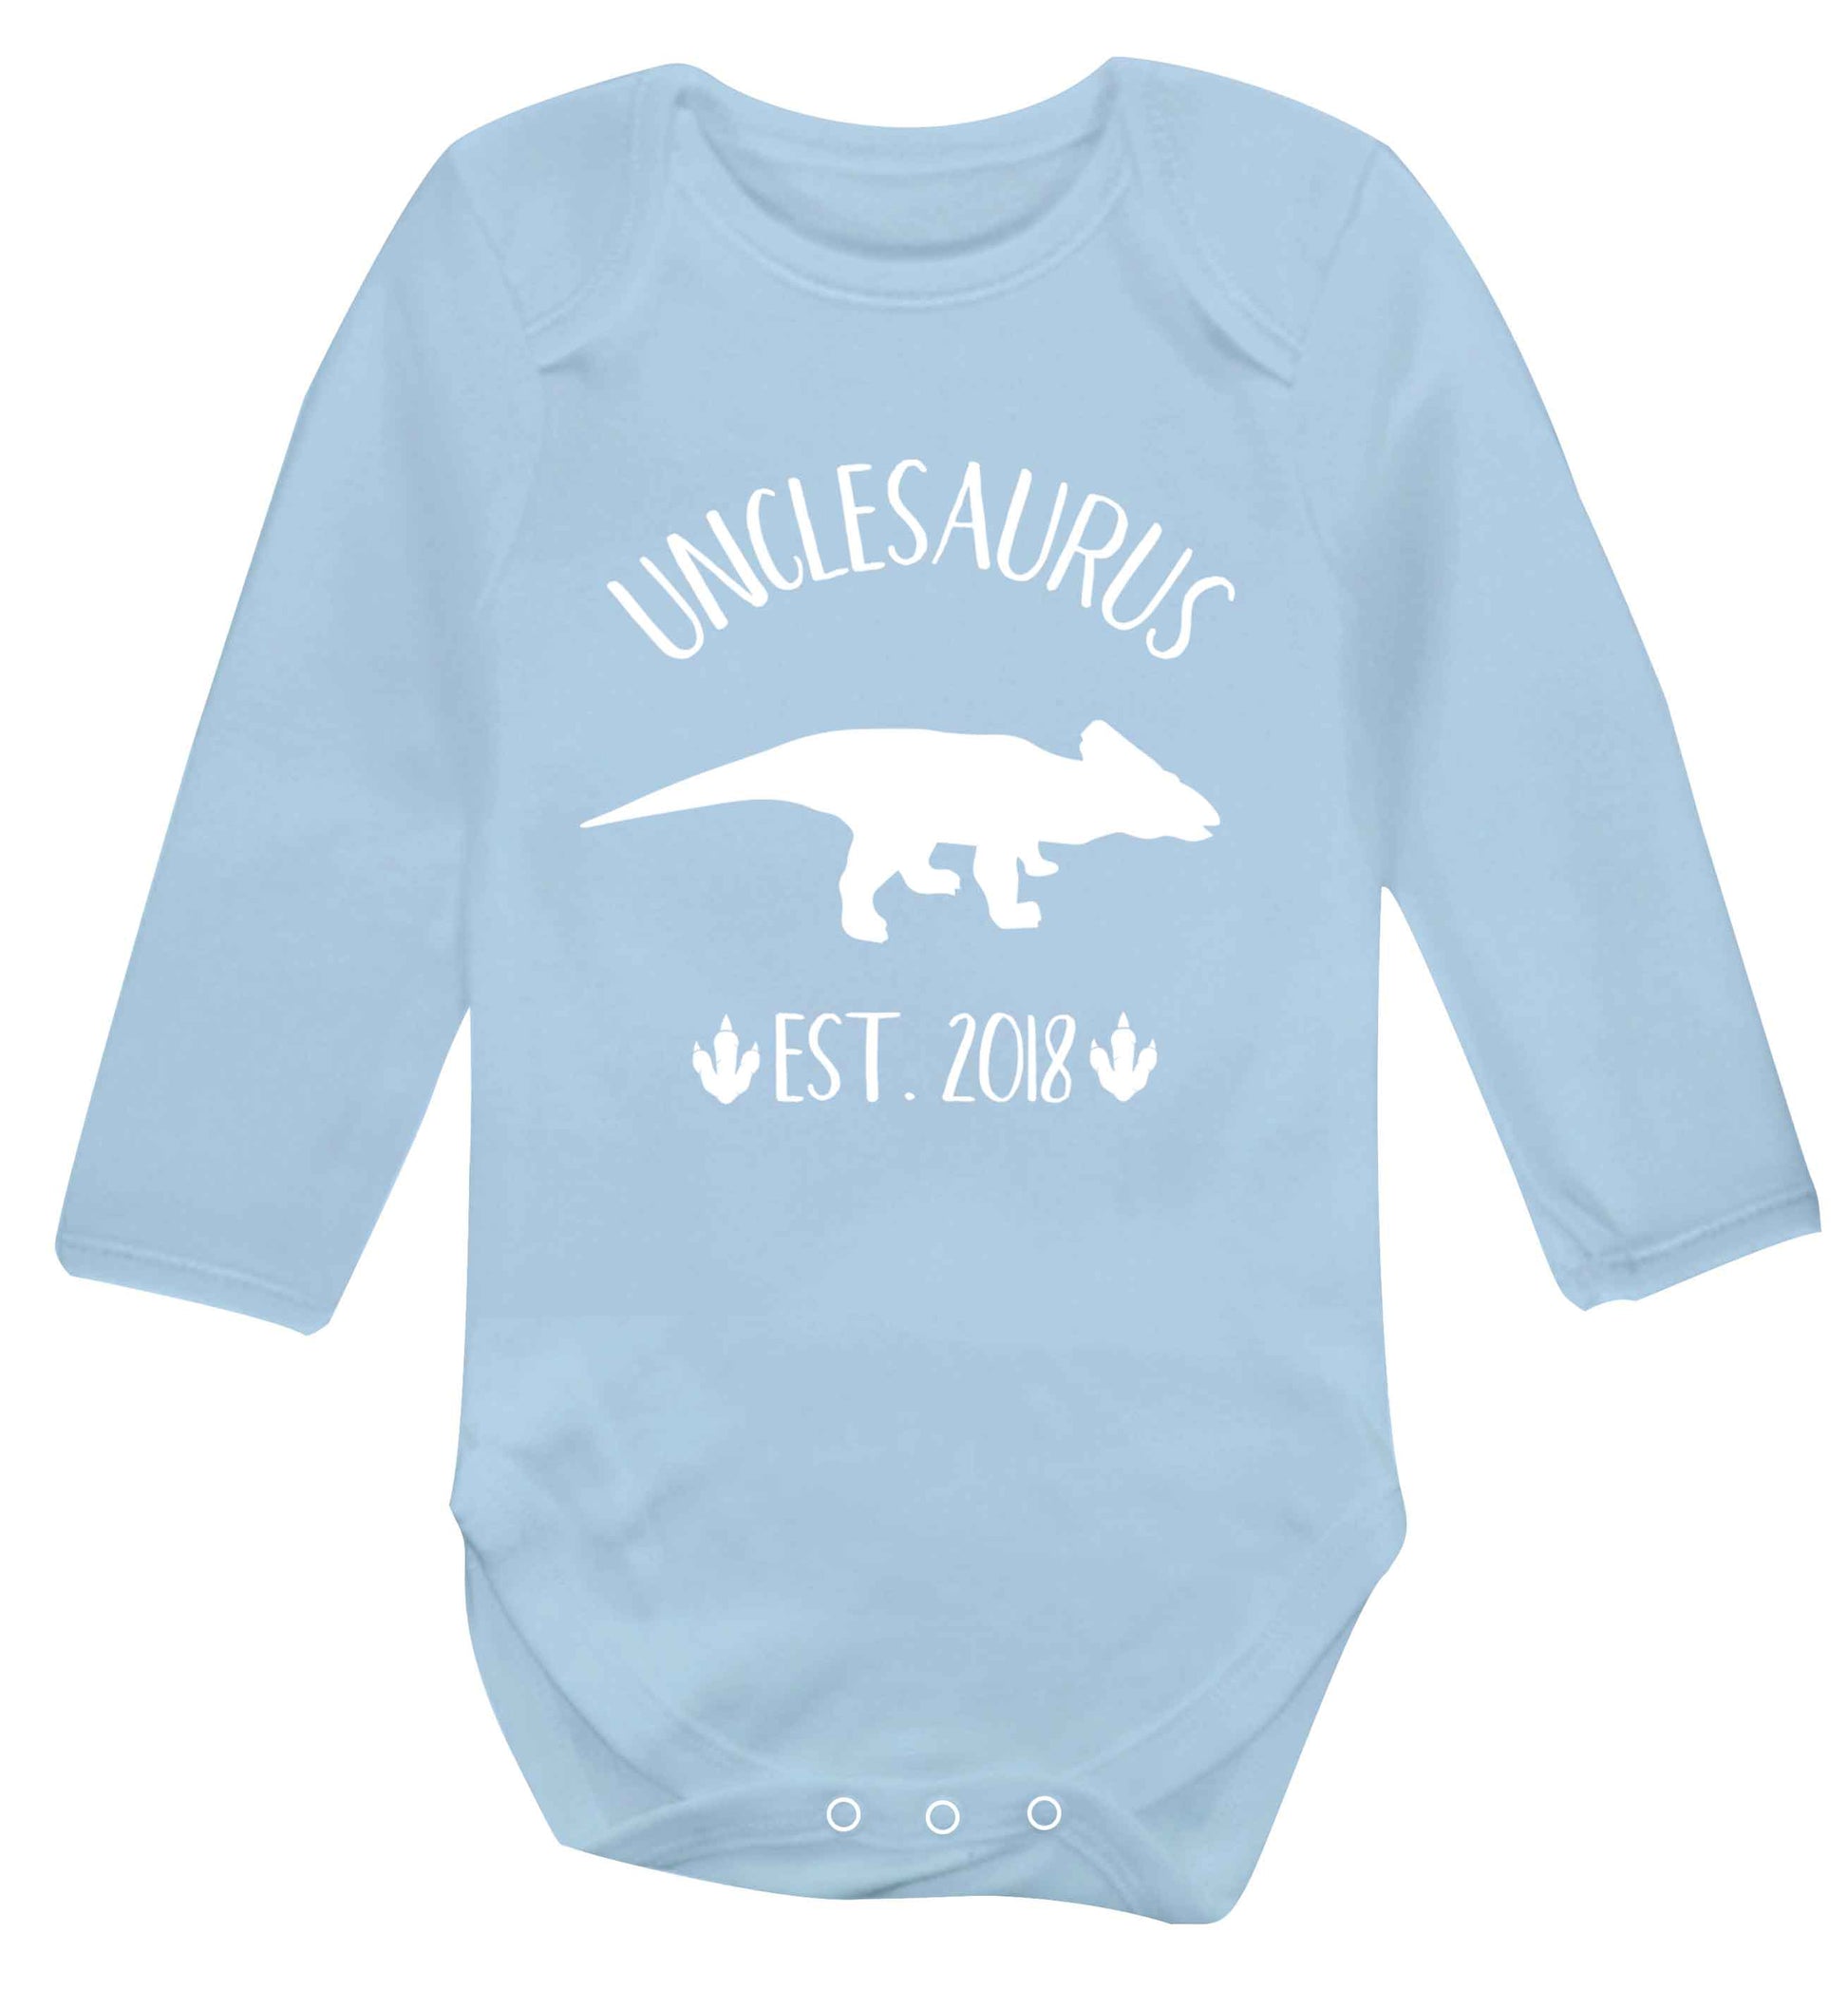 Personalised unclesaurus since (custom date) Baby Vest long sleeved pale blue 6-12 months